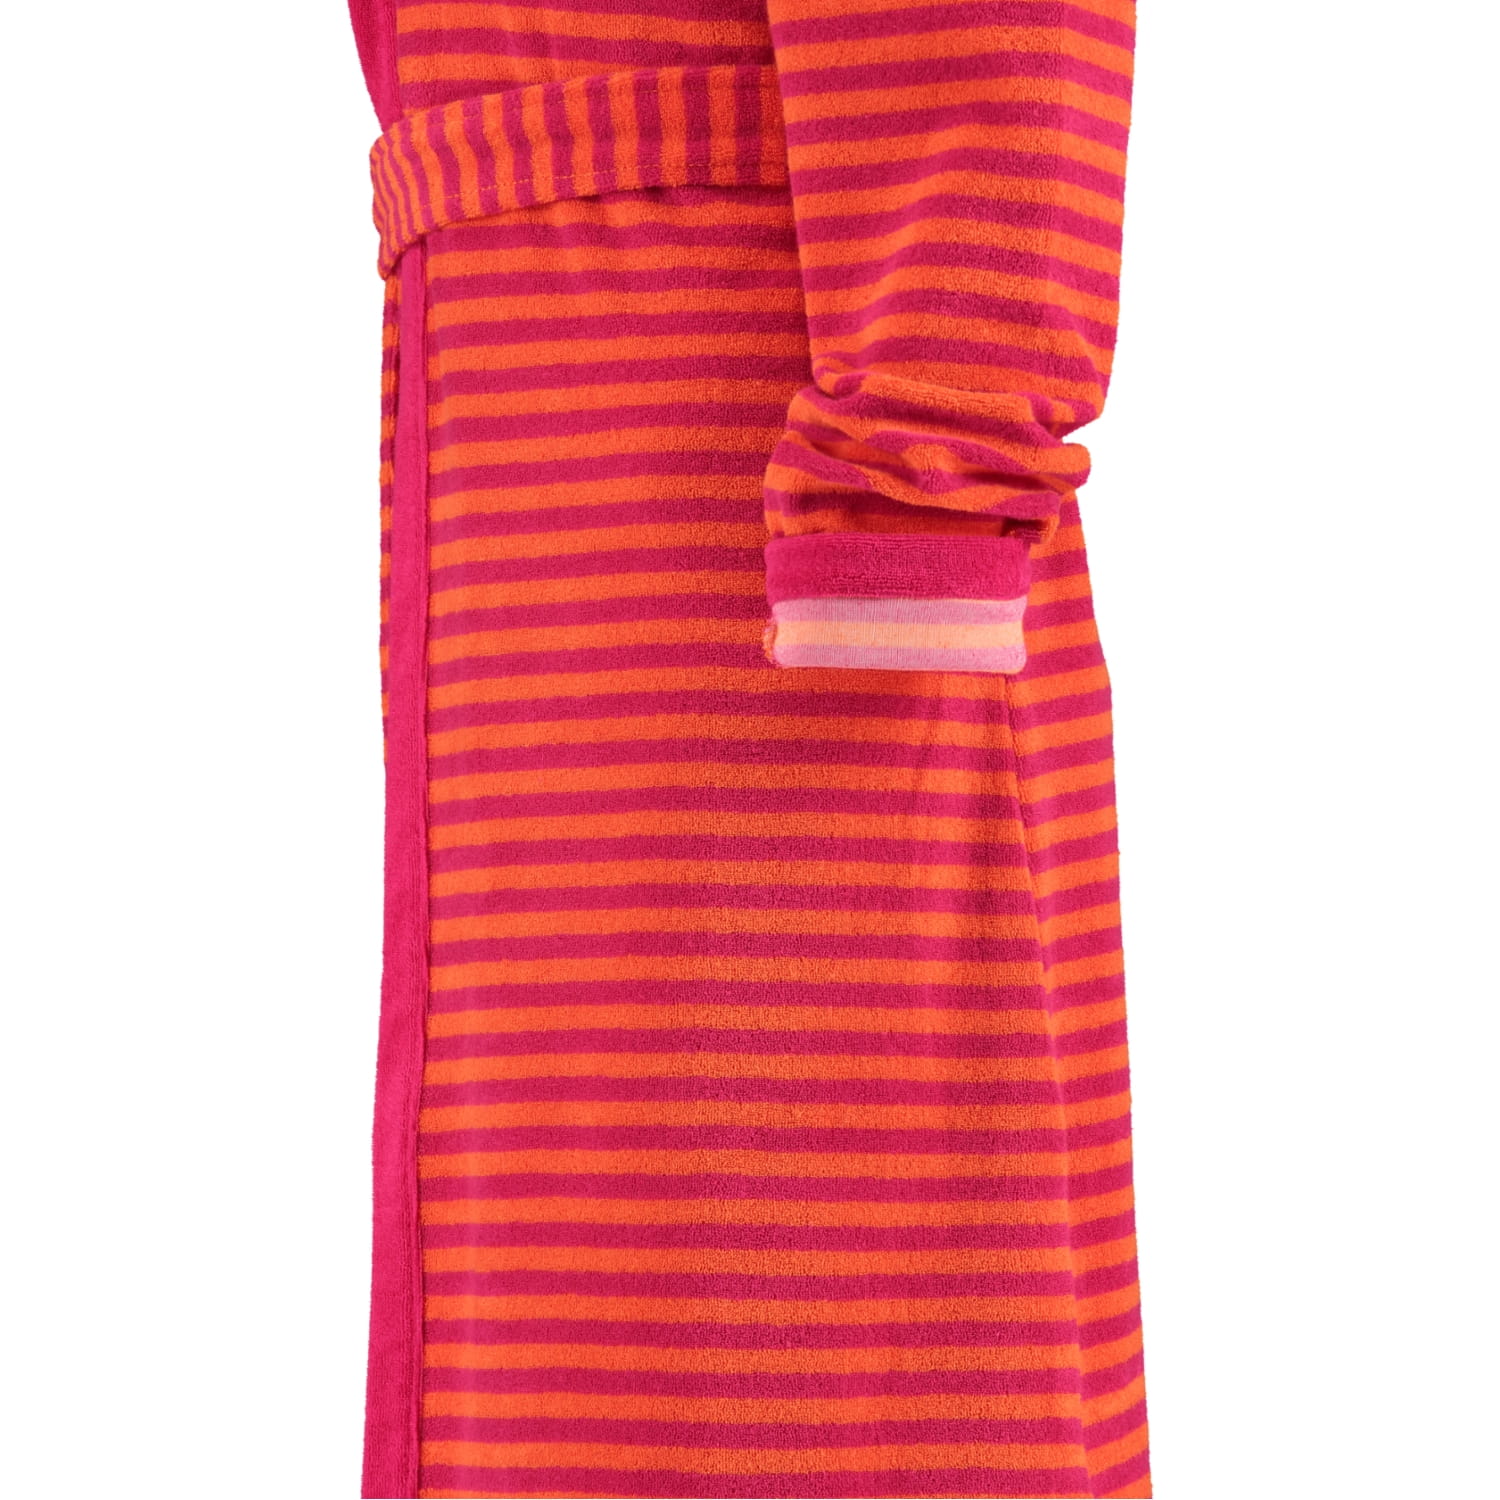 Esprit Damen Bademantel Striped Hoody Kapuze - Farbe: raspberry - 001 |  Damen | Bademantel